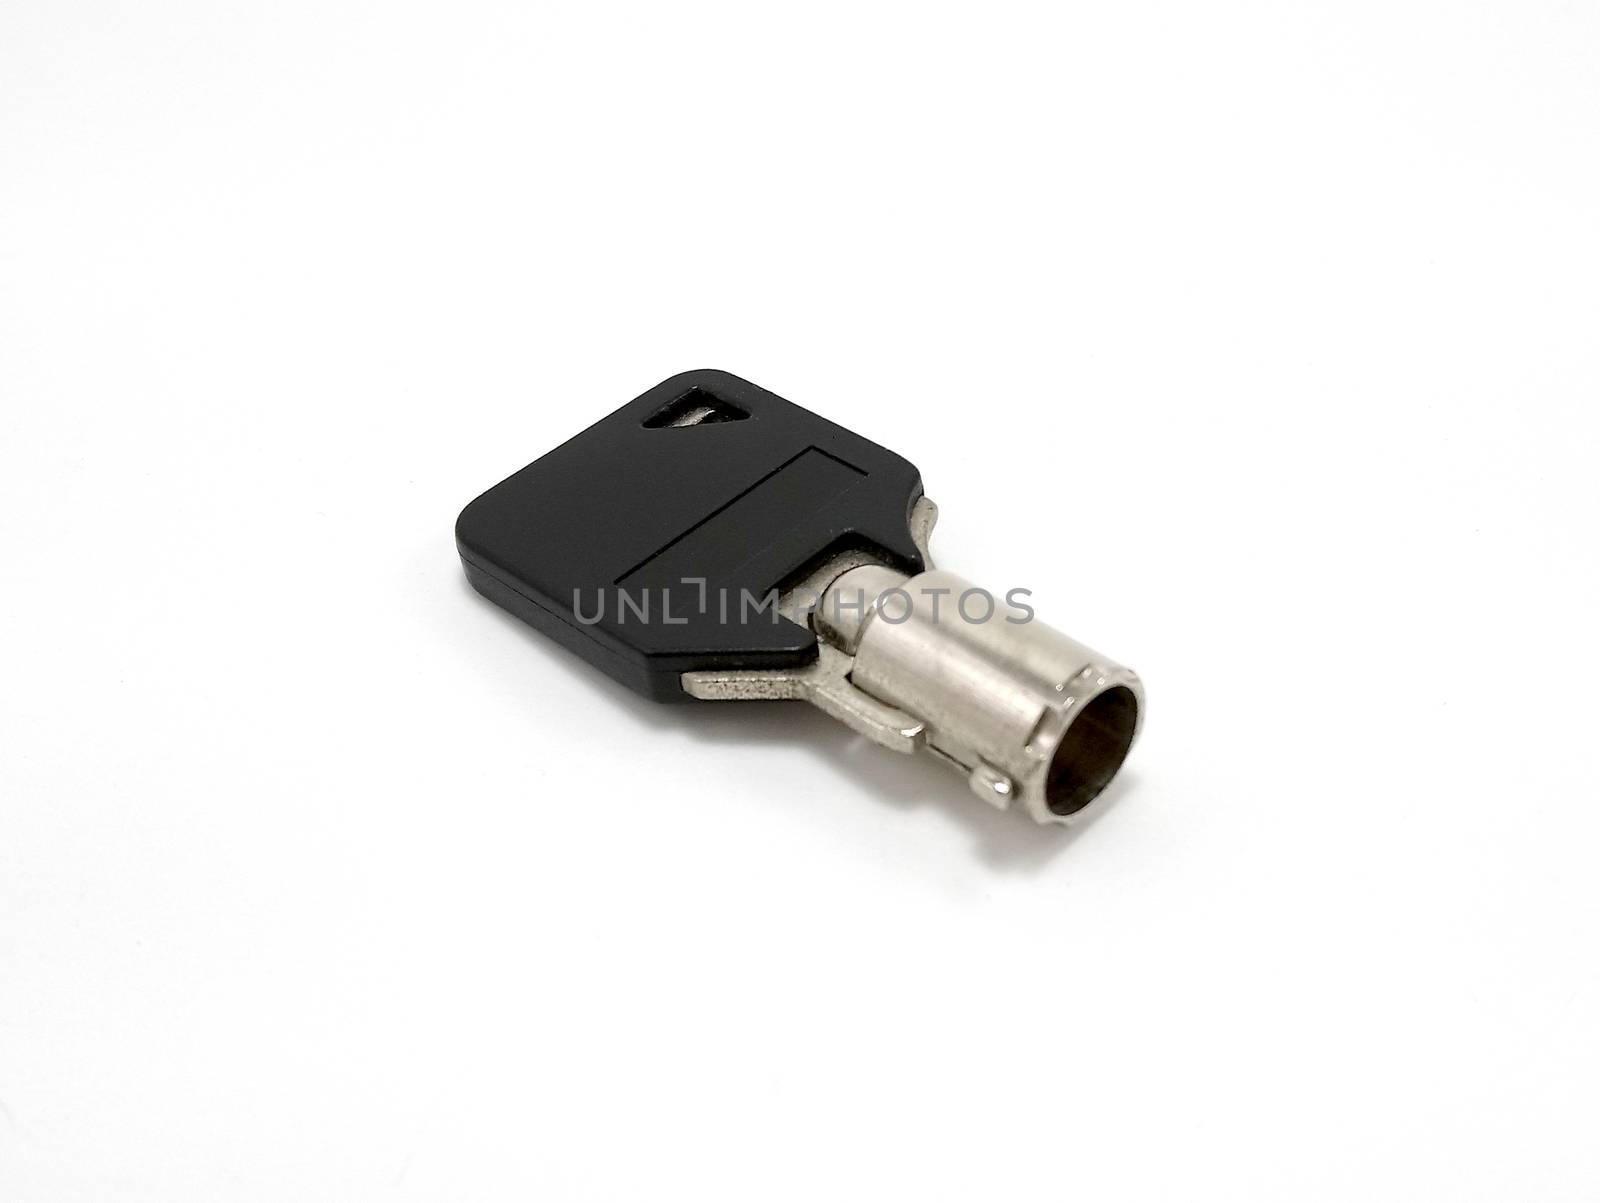 small black tubular key use to lock and unlock keyhole